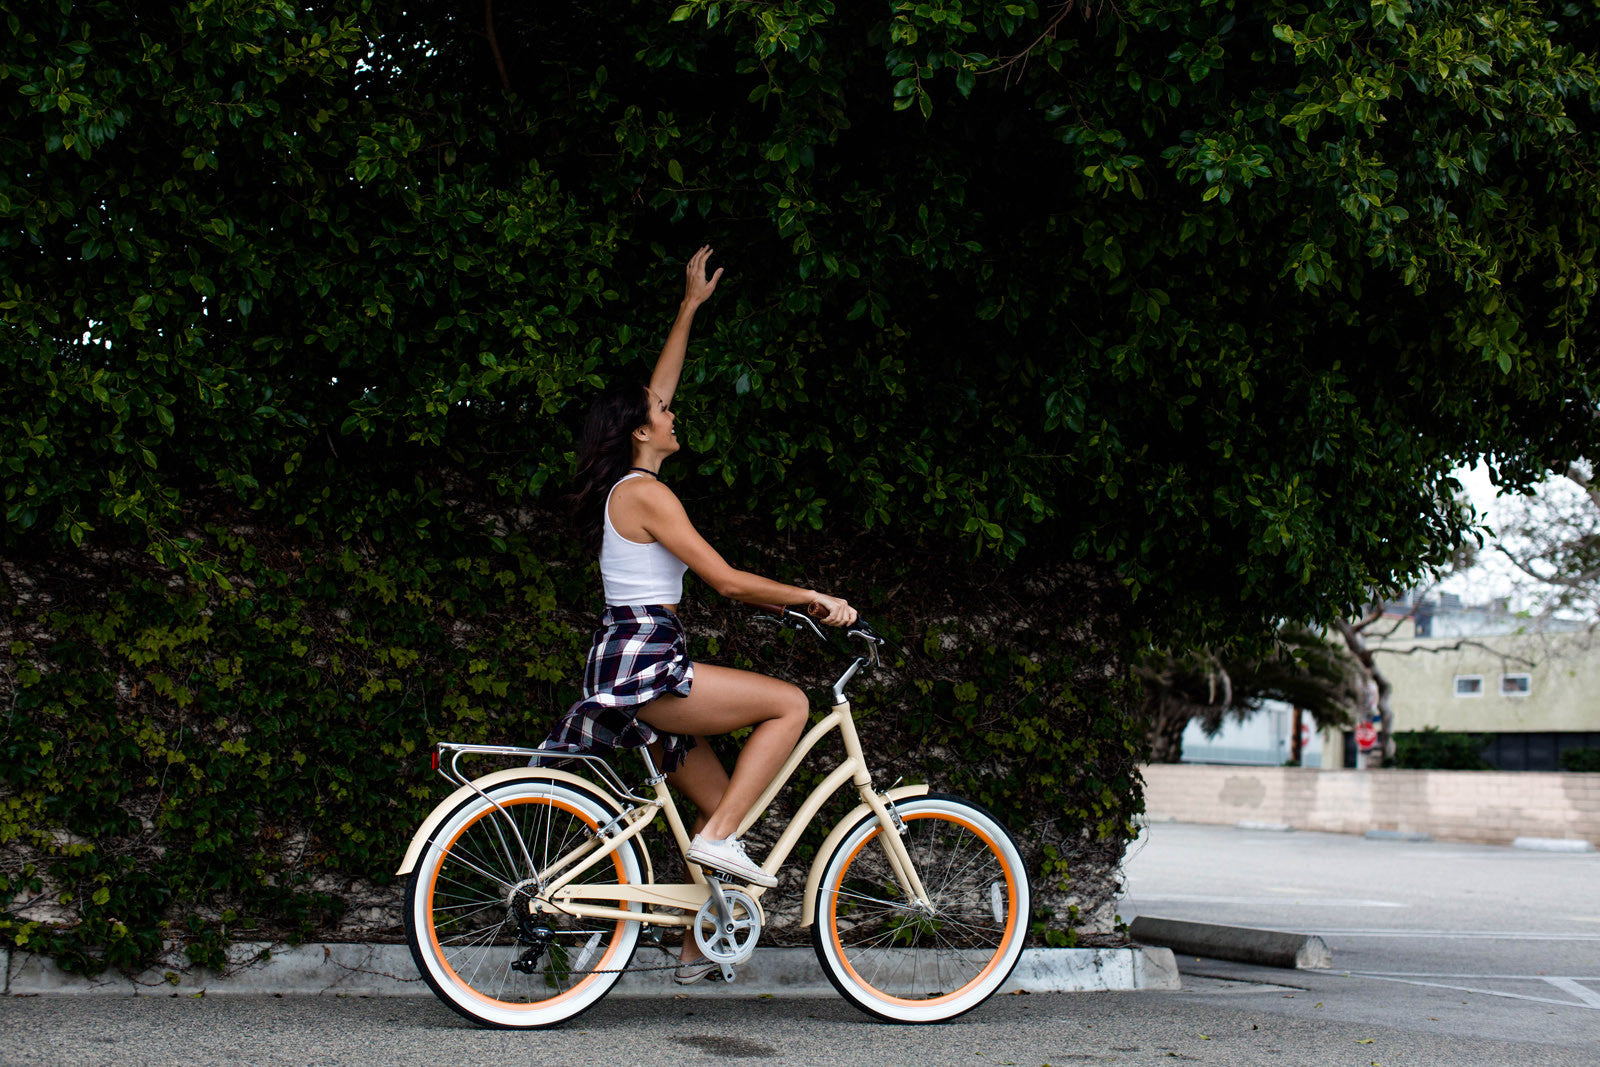 How To Choose Between A FIRMSTRONG Or sixthreezero Women’s Bike Cruiser